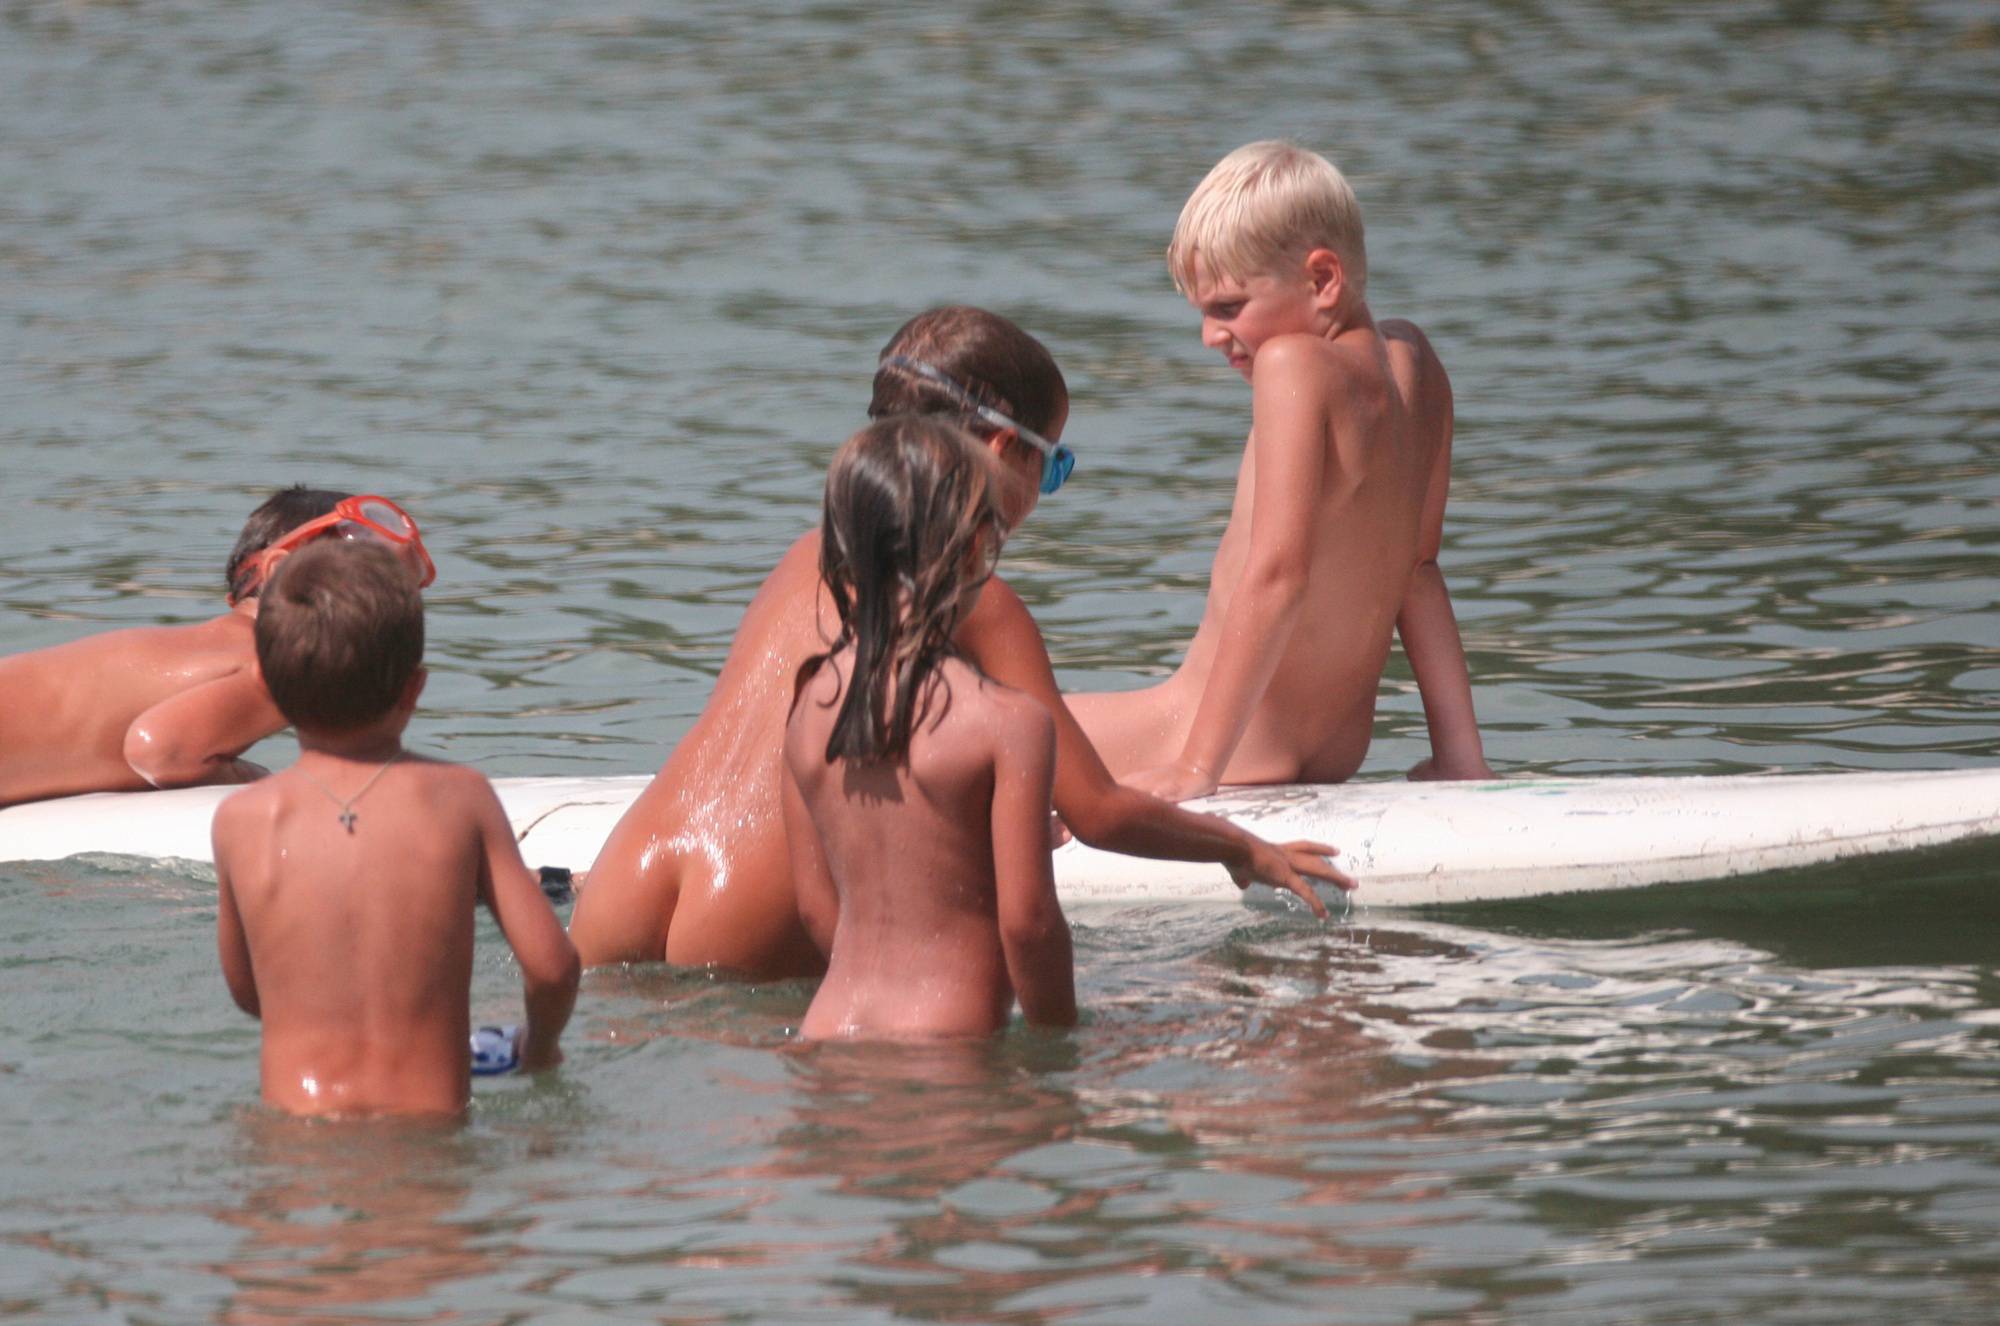 Nudist Gallery Several Kids On Surfboard - 2